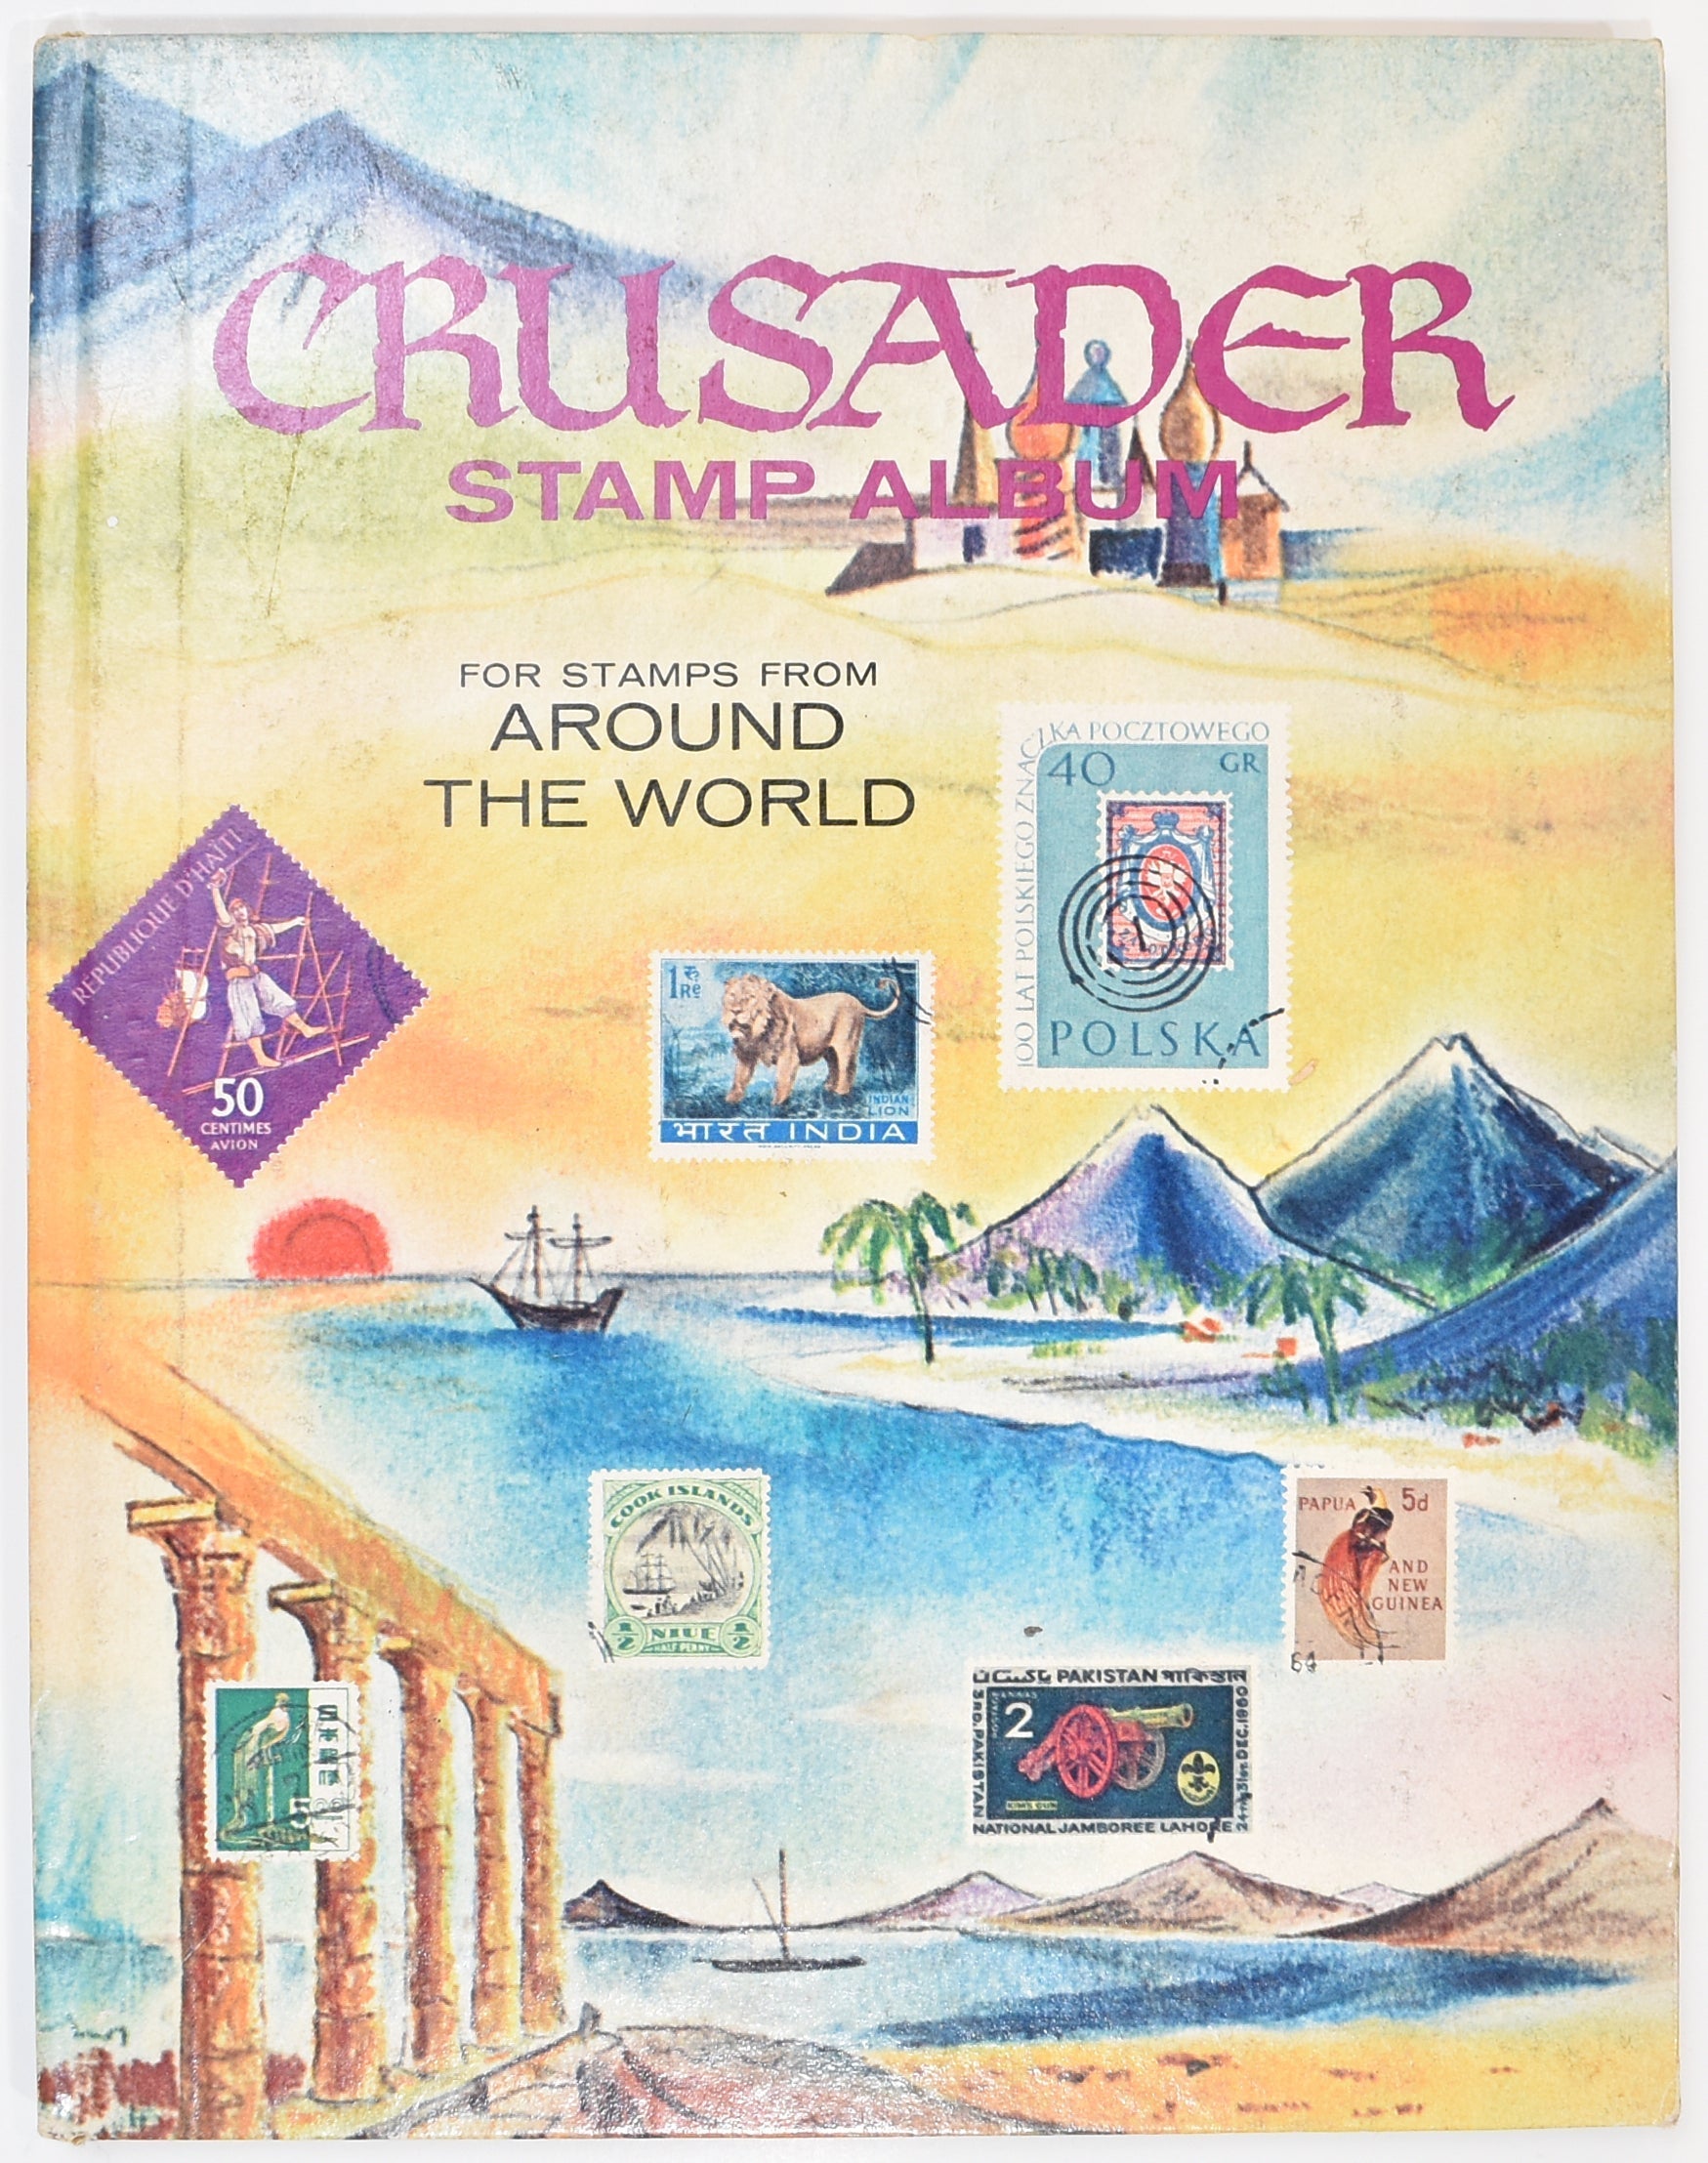 Crusader Stamp album Stamps from around the world No. 6701